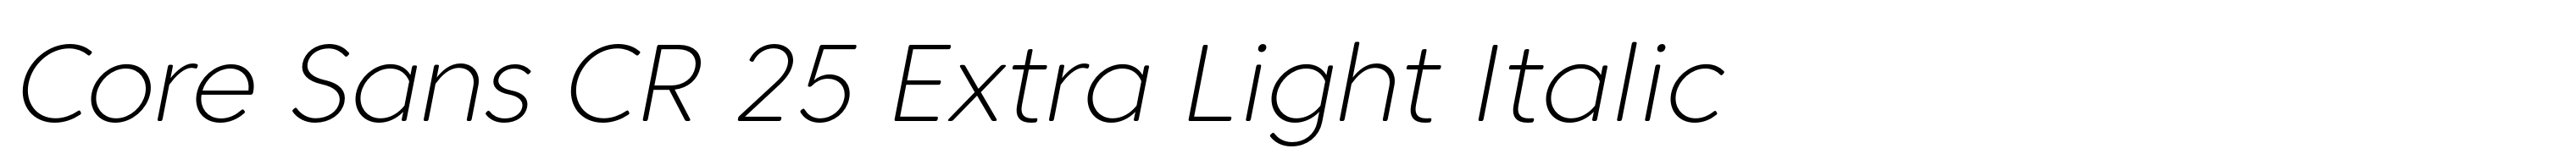 Core Sans CR 25 Extra Light Italic